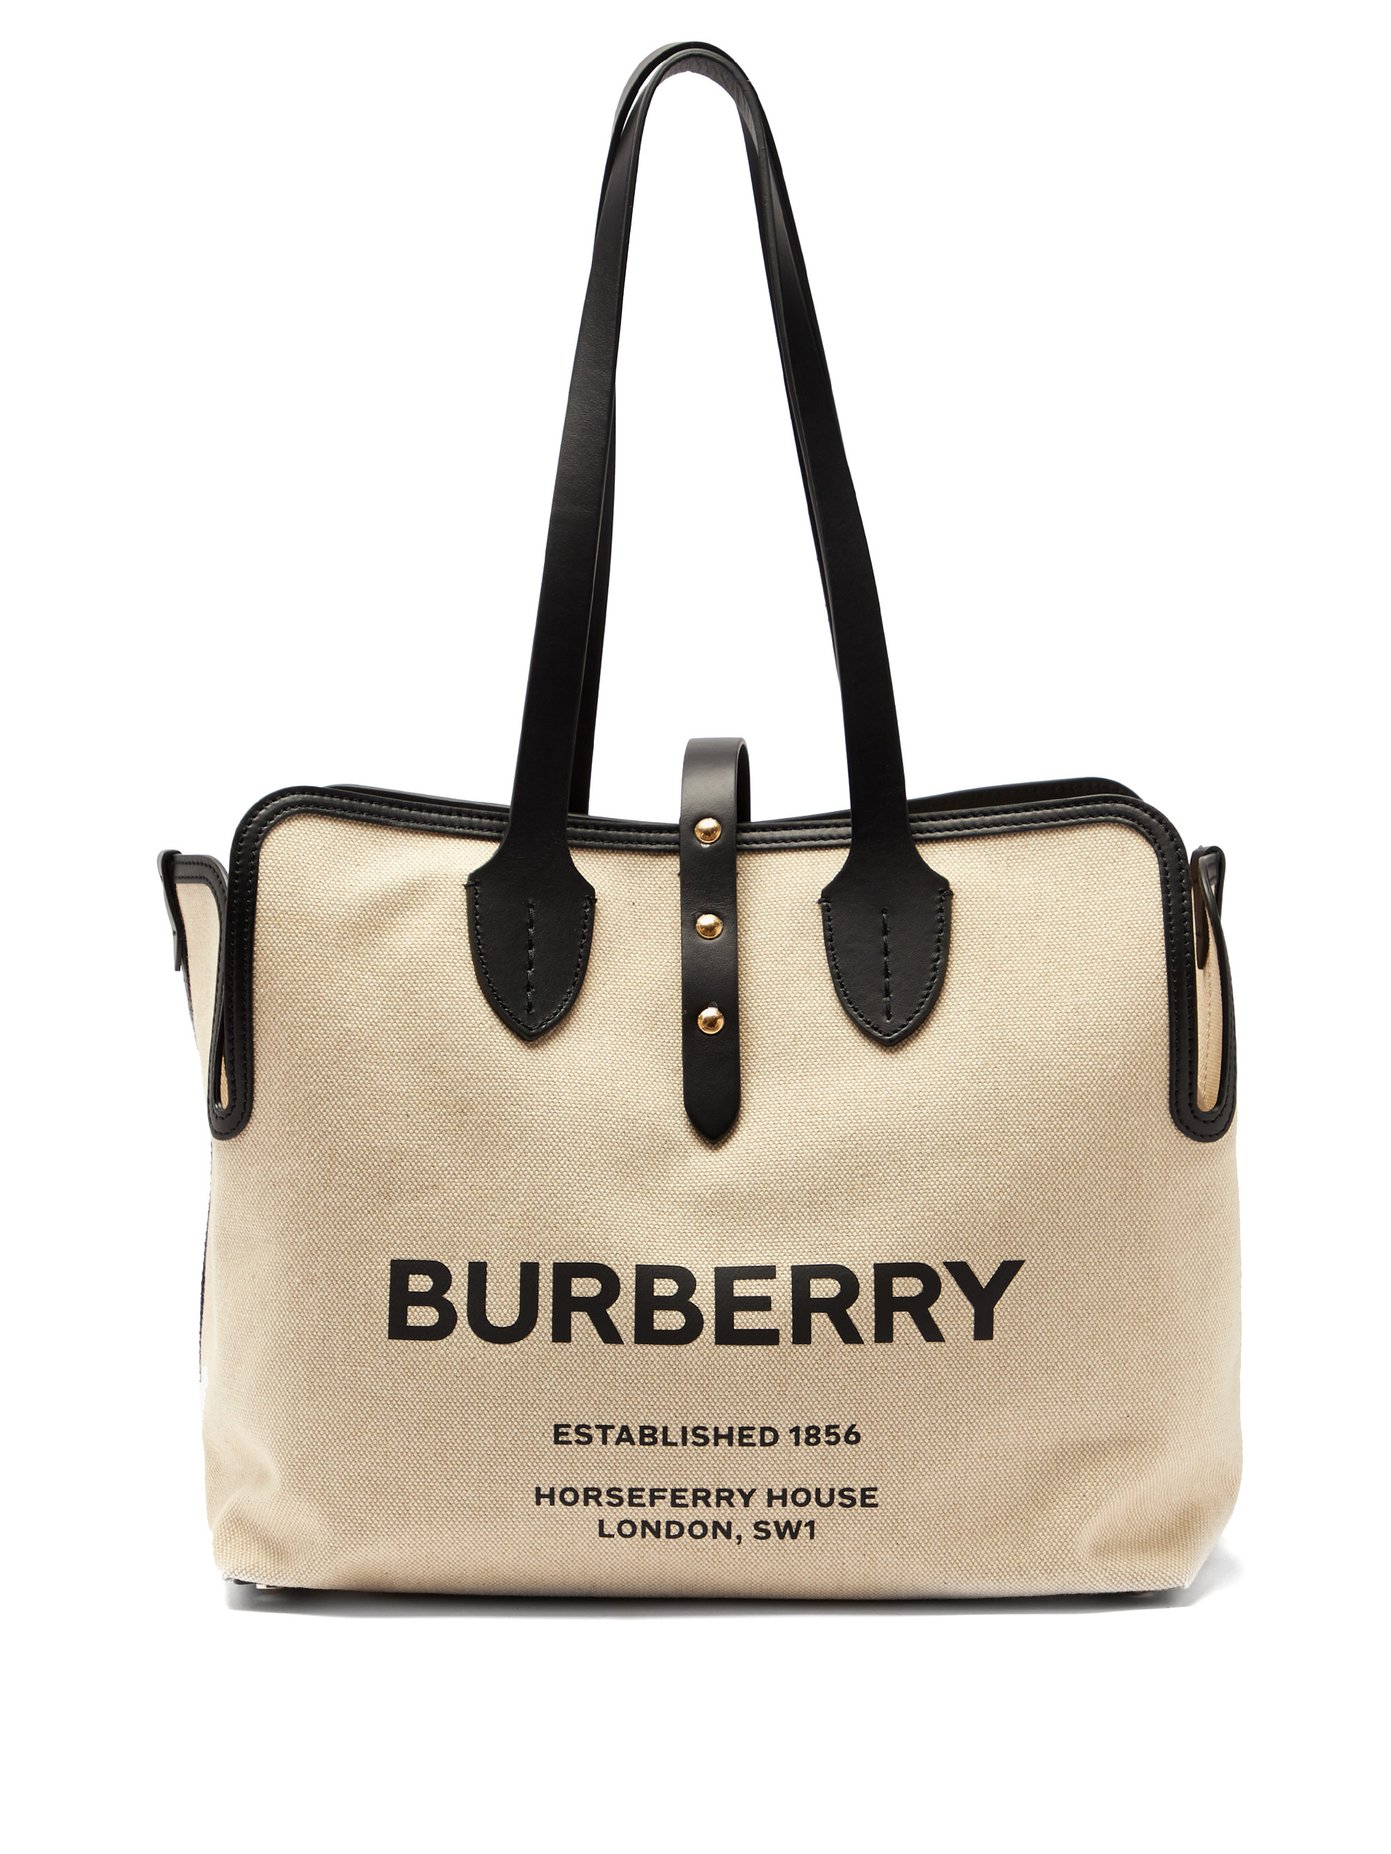 burberry tote bags uk